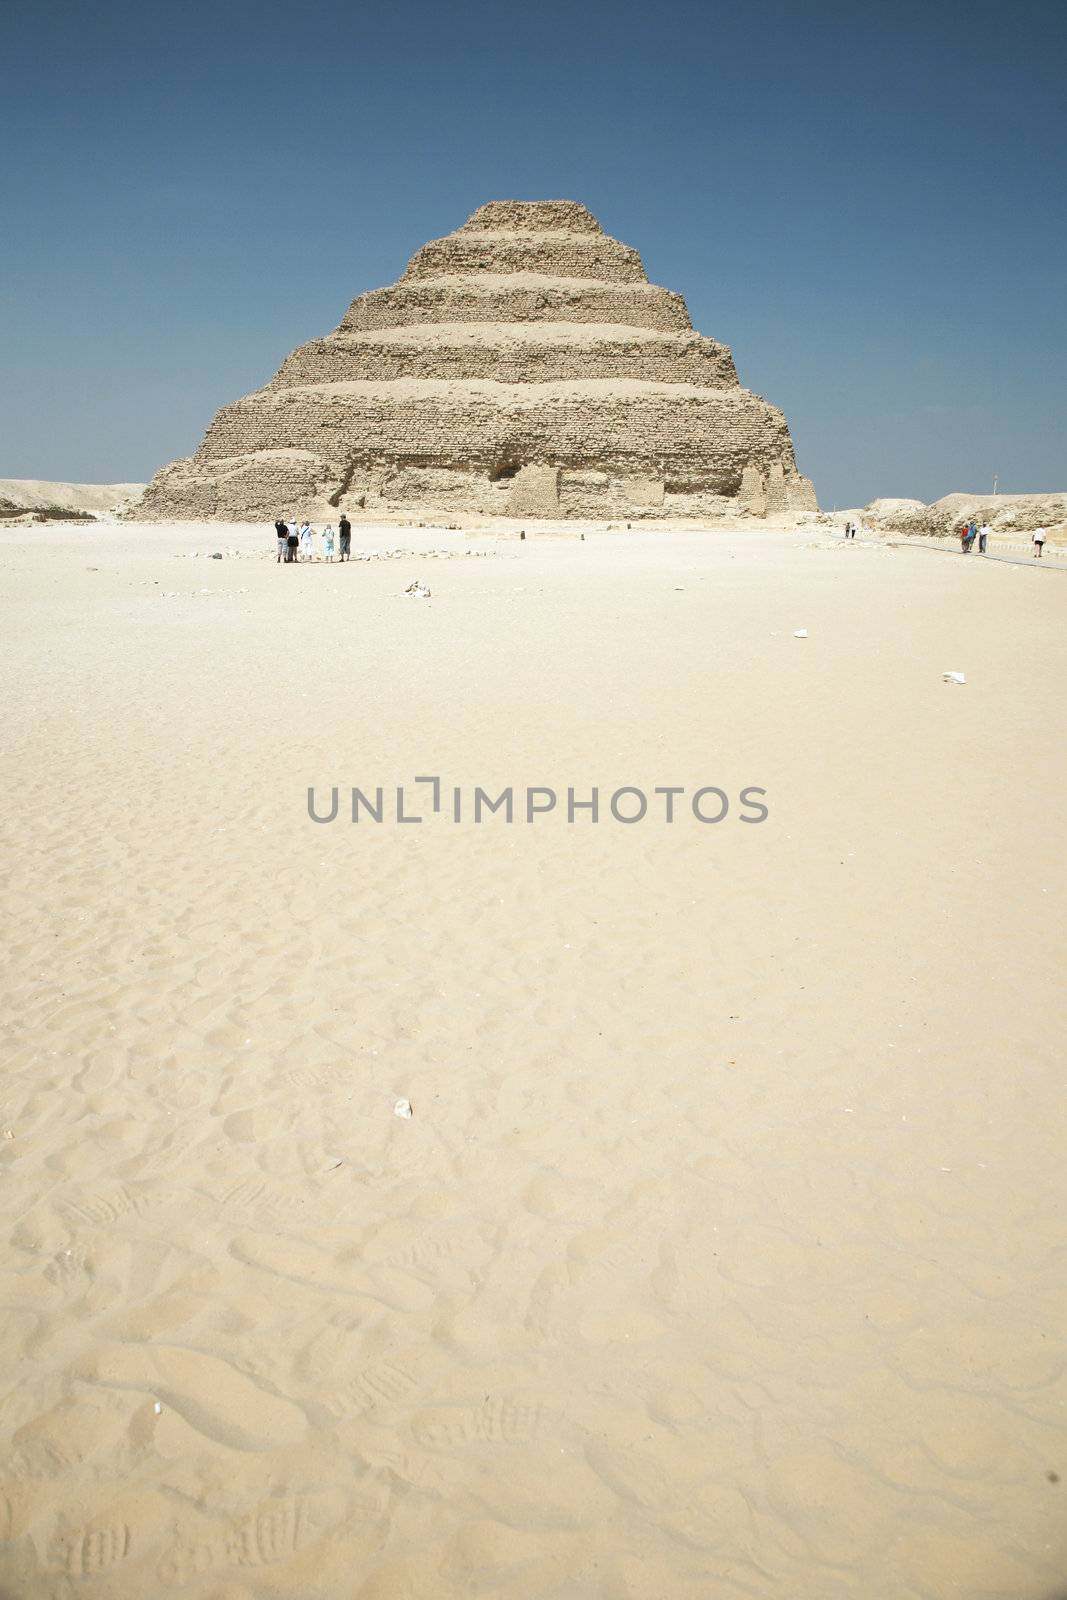 saqqara is the first pyramid in egypt